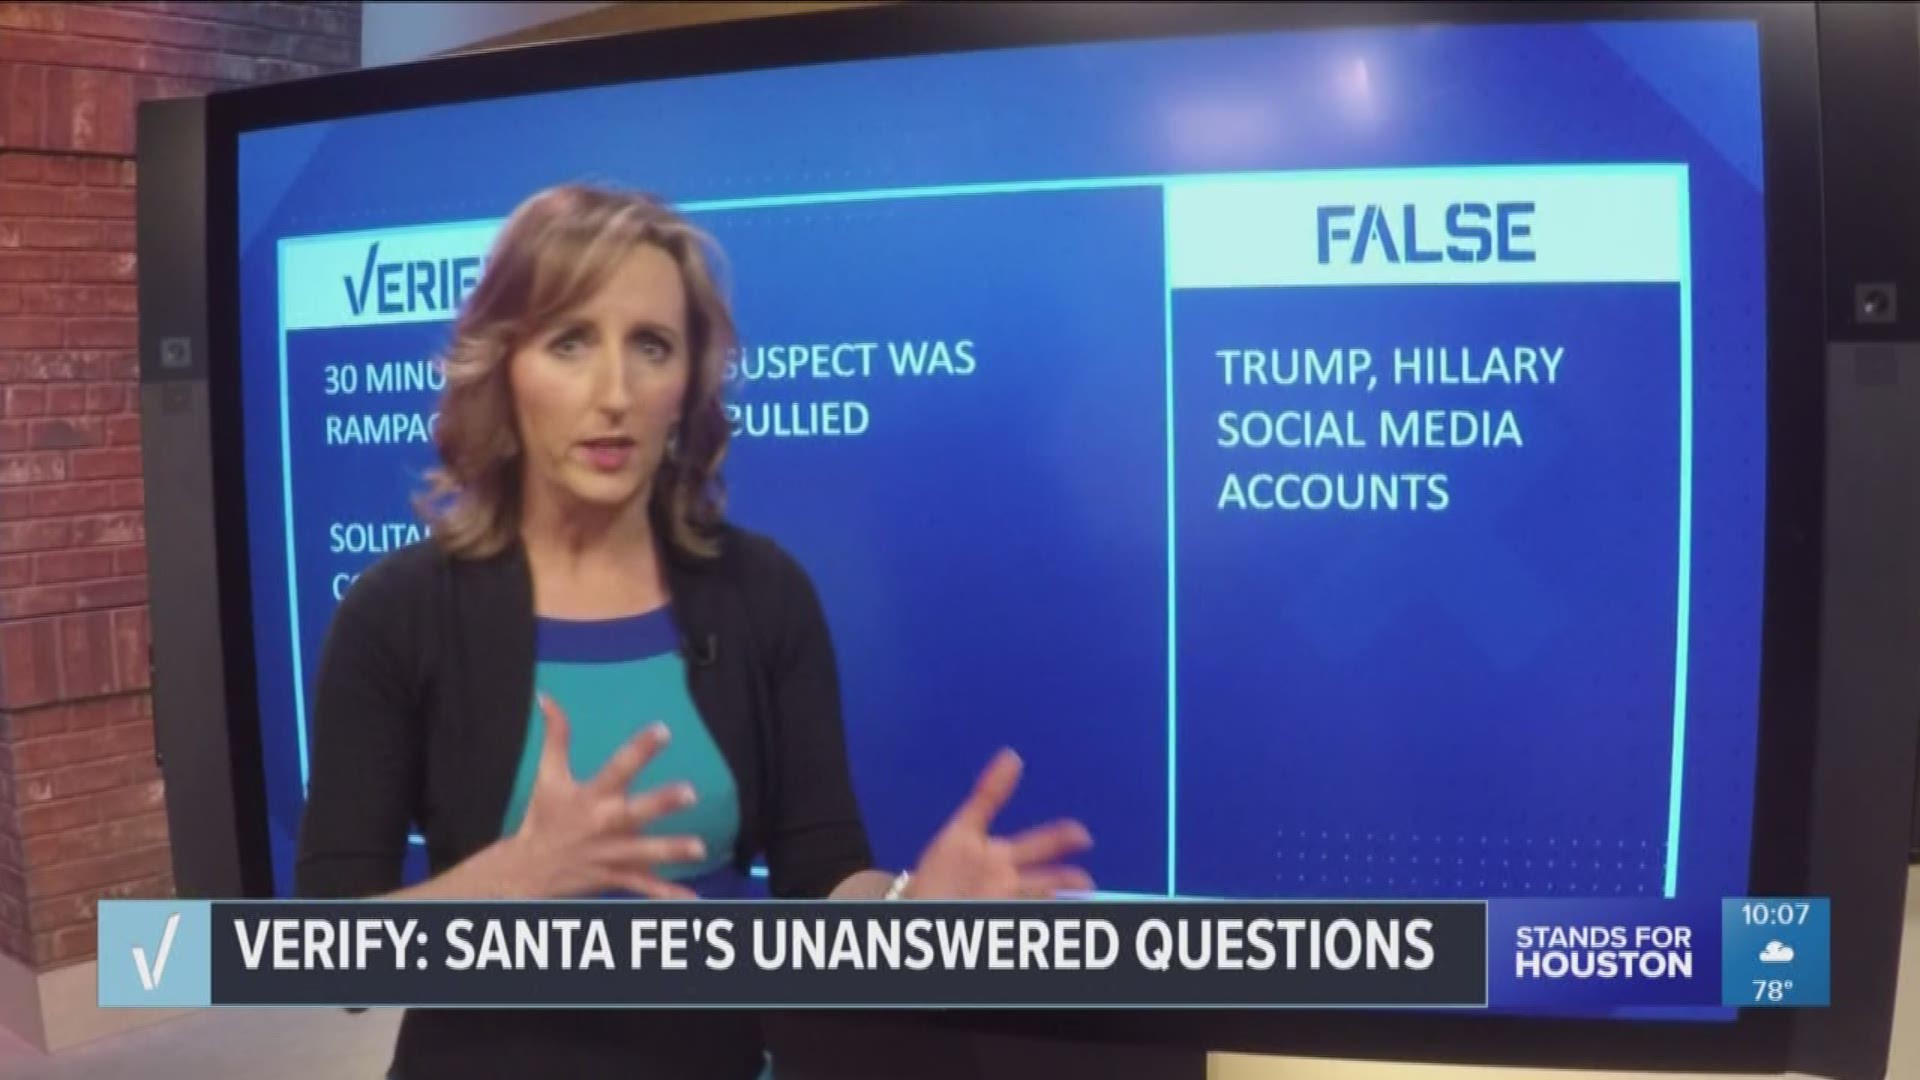 Tiffany Craig sets out to verify information regarding the Santa Fe High School shooting